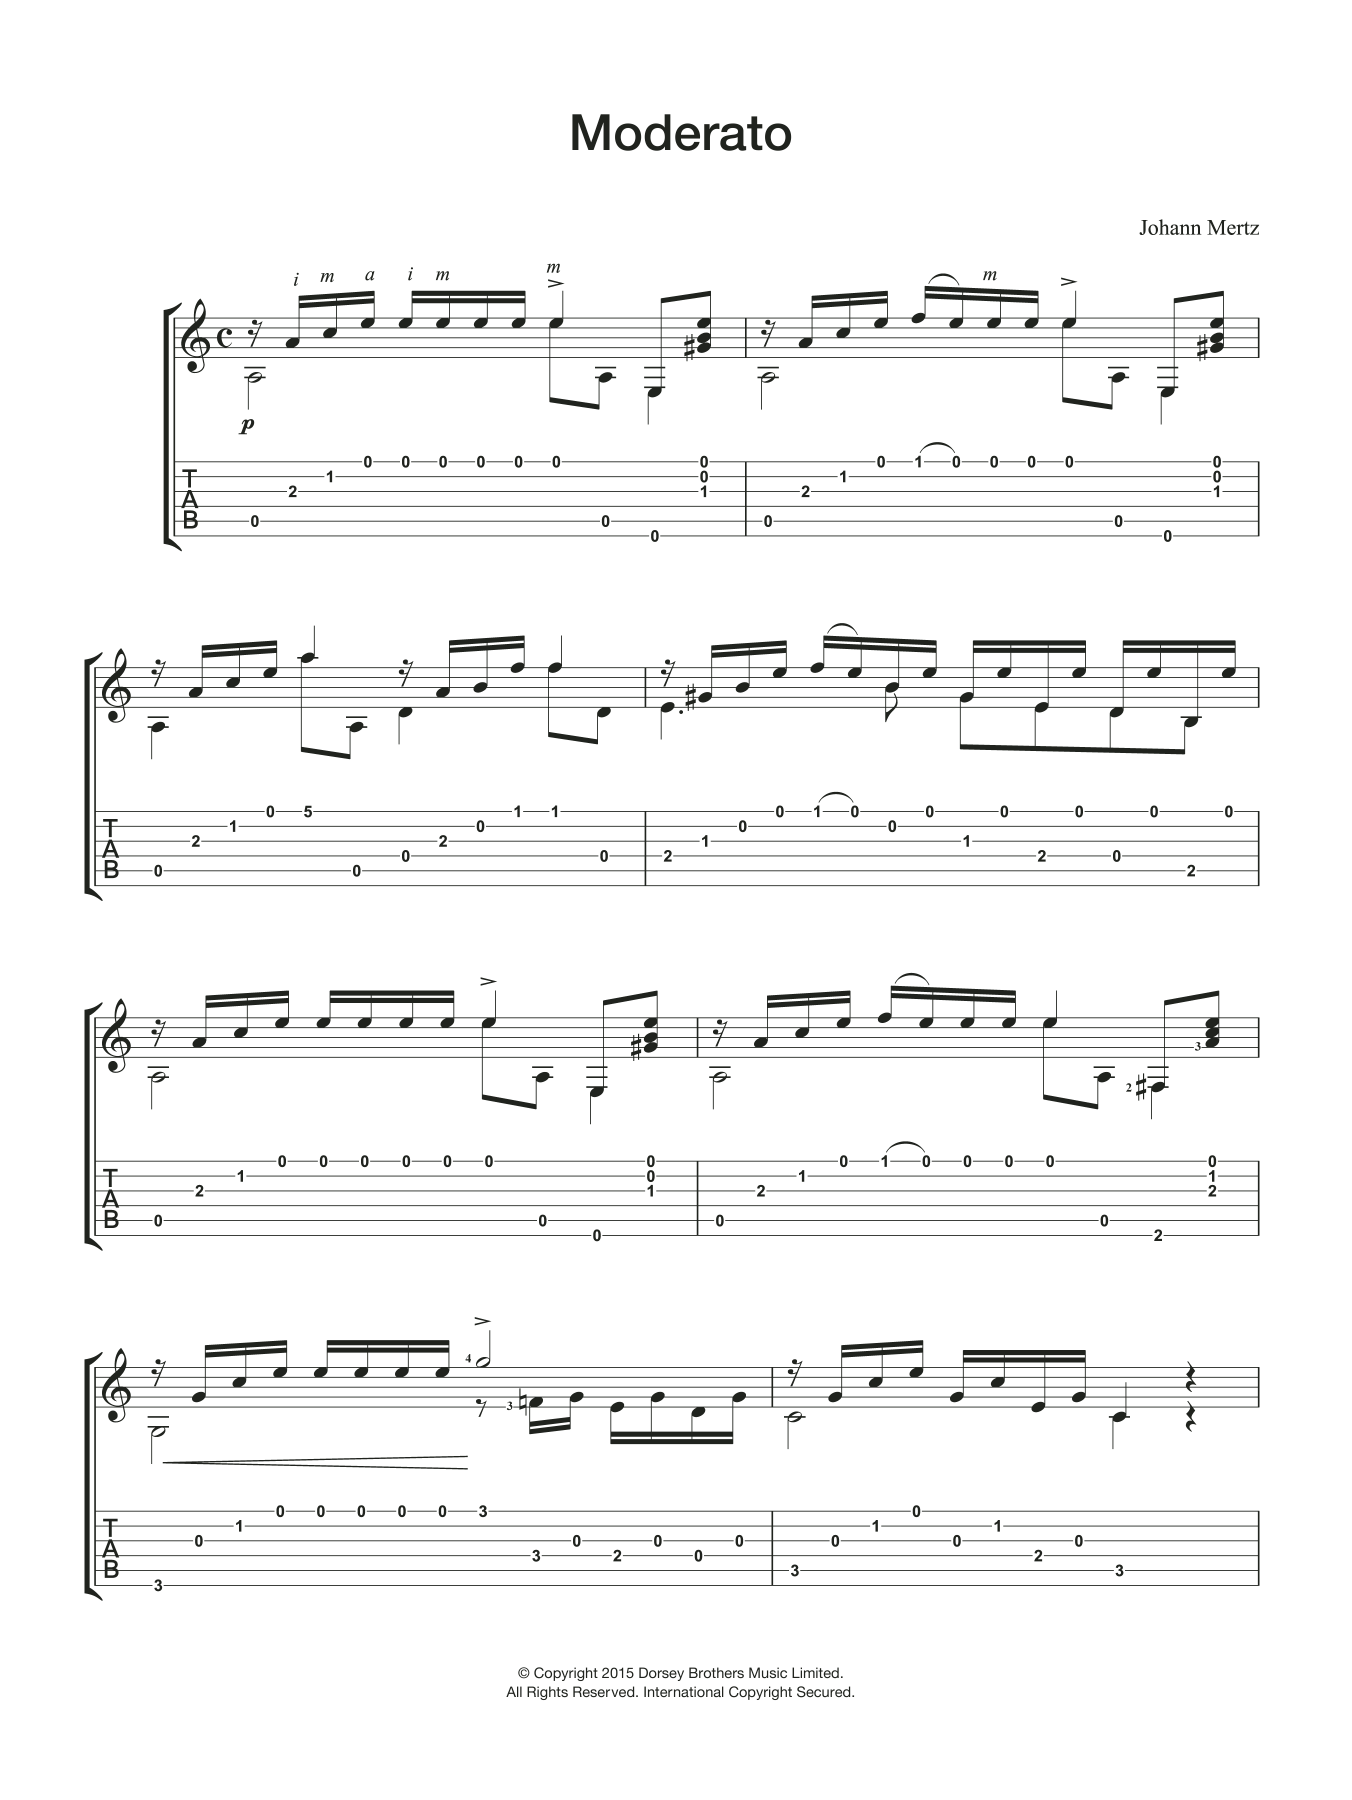 Johann Kaspar Mertz Moderato Sheet Music Notes & Chords for Guitar - Download or Print PDF